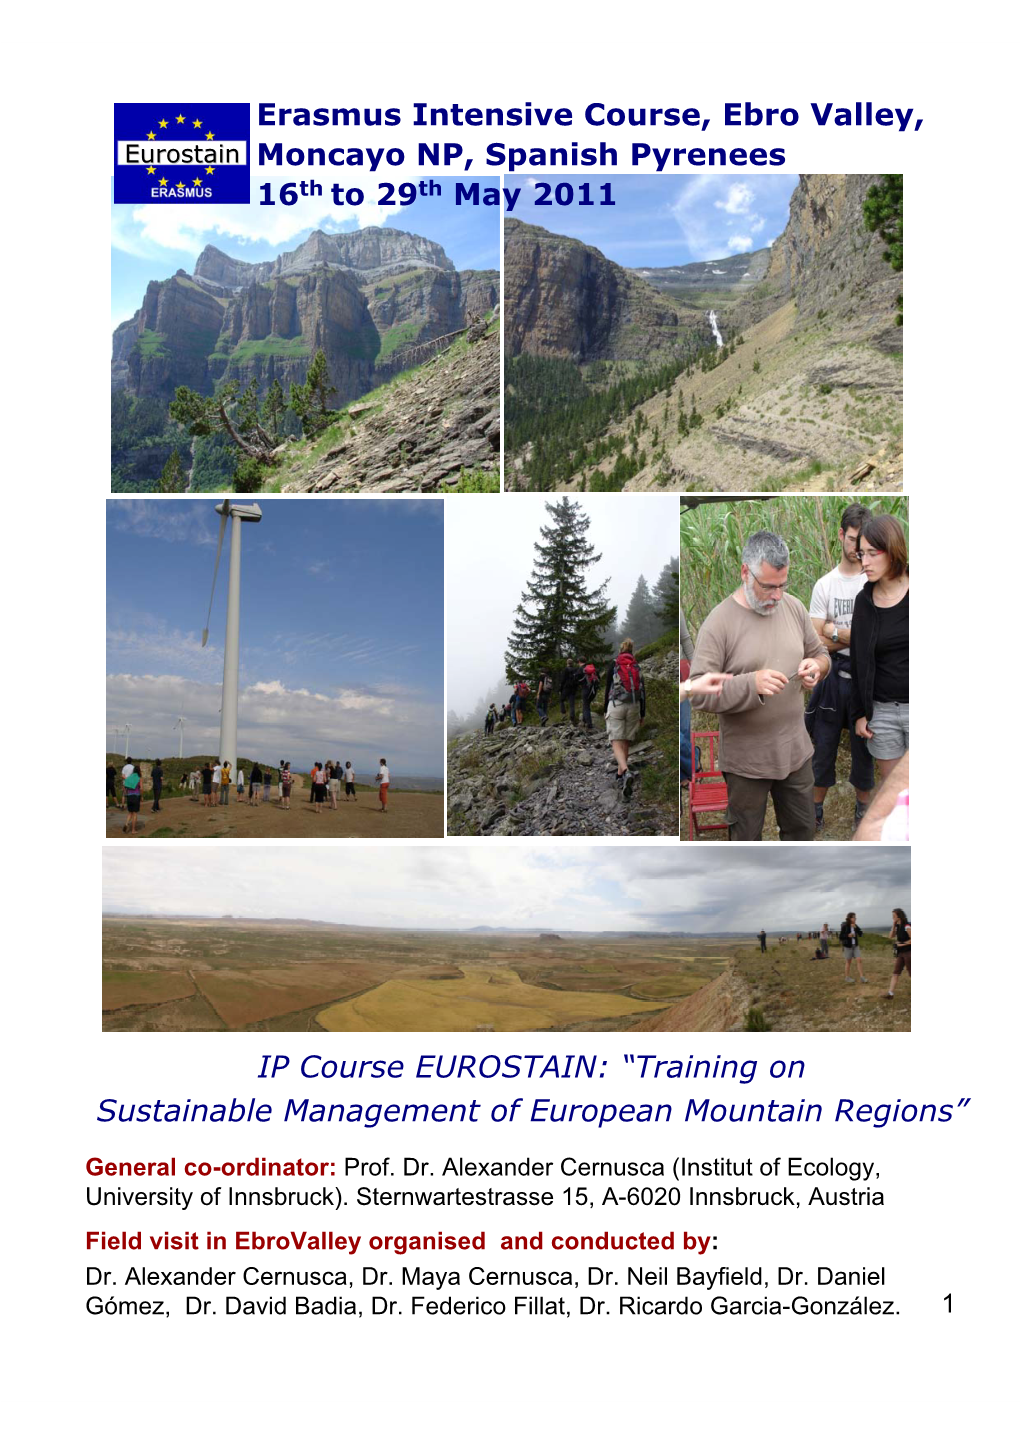 IP Course EUROSTAIN: “Training on Sustainable Management of European Mountain Regions” Erasmus Intensive Course, Ebro Valley